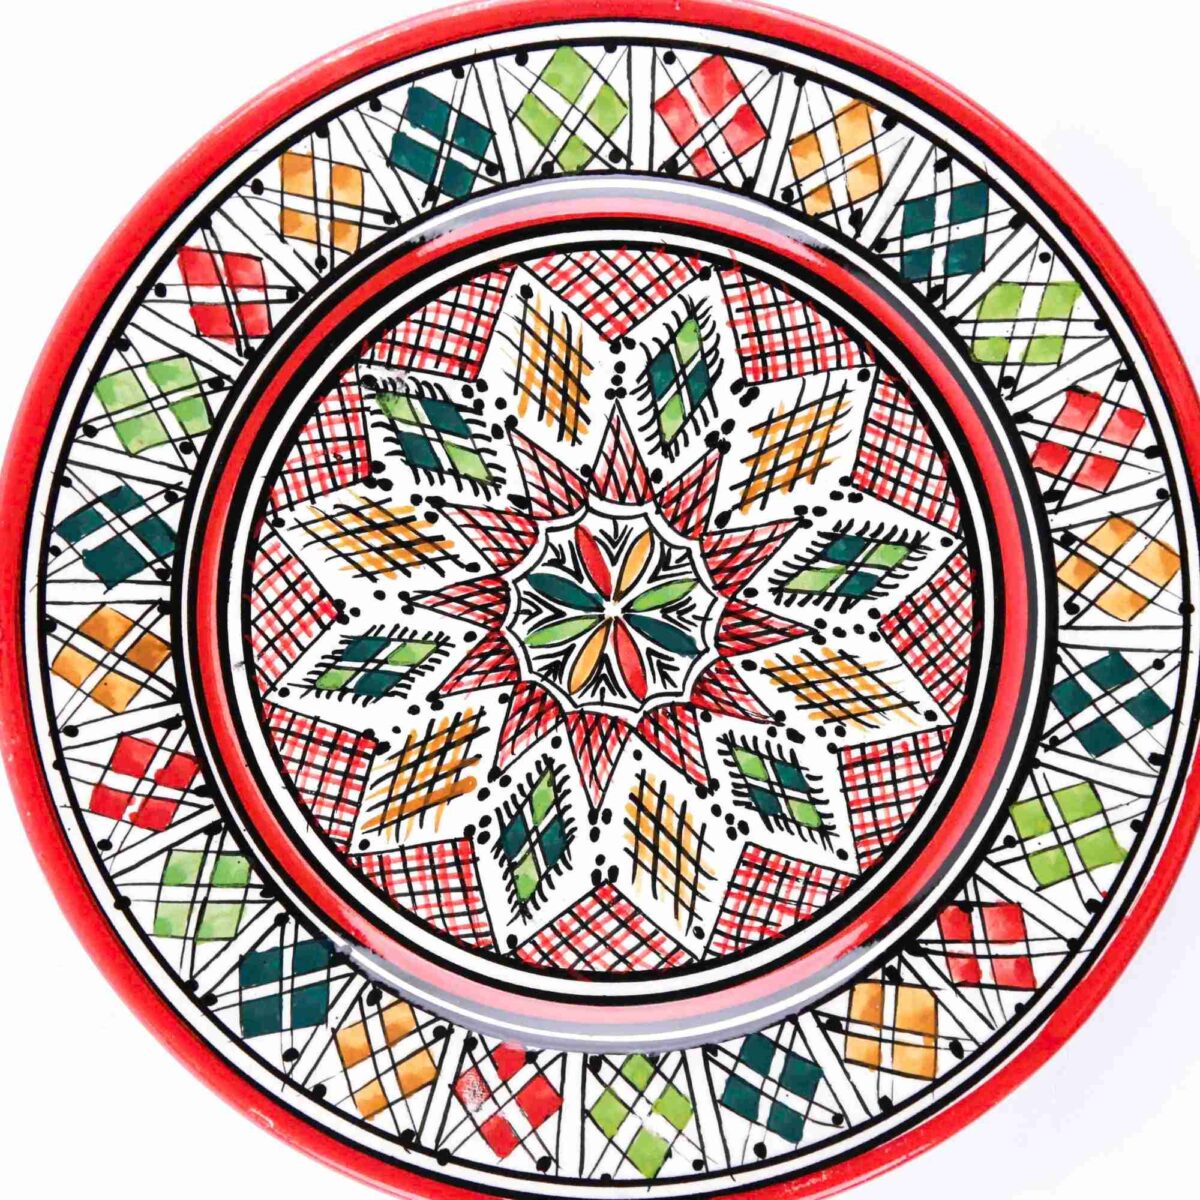 Moroccan-ceramic-dish